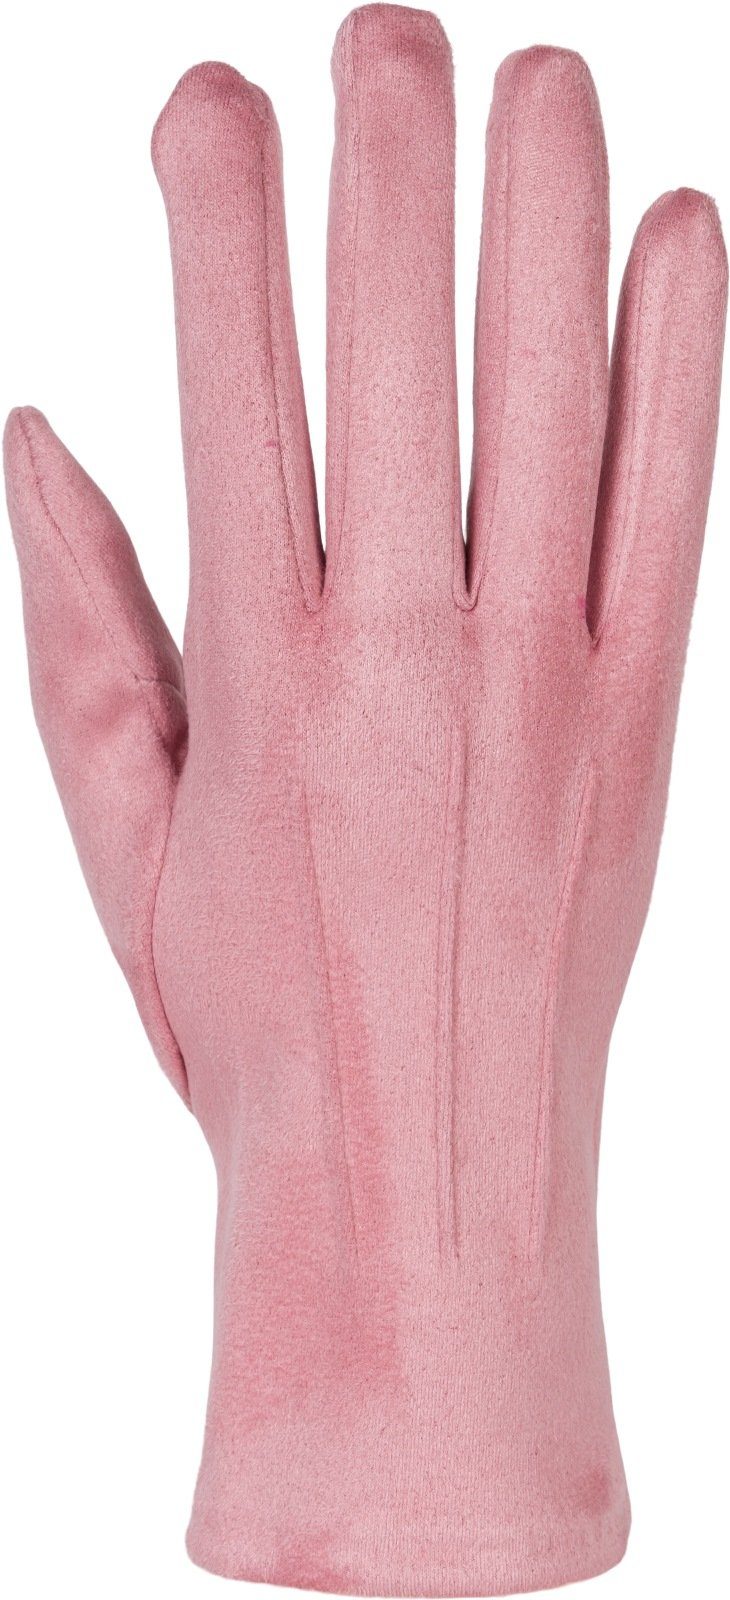 styleBREAKER Fleecehandschuhe Einfarbige Touchscreen Handschuhe Altrose Ziernähte